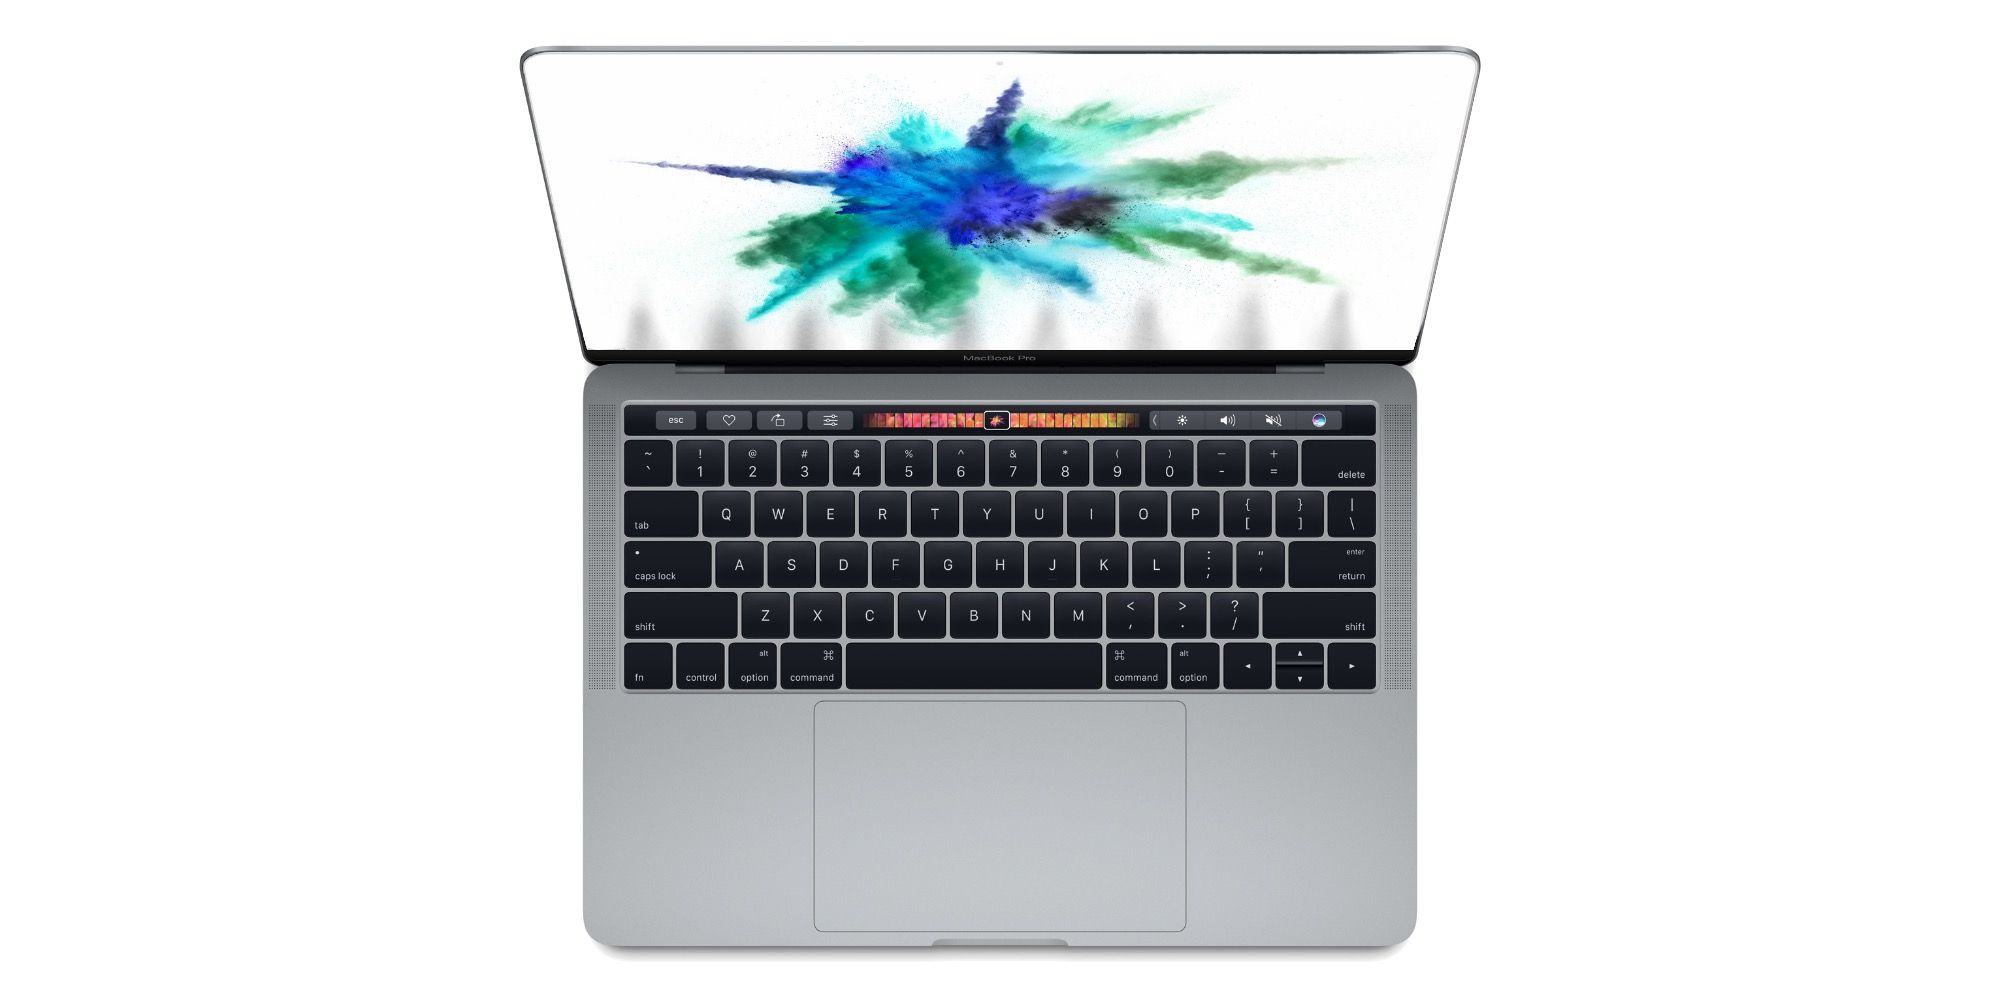 Apple MacBook Pro ClassAction Lawsuit Focuses On Backlight Display Issue